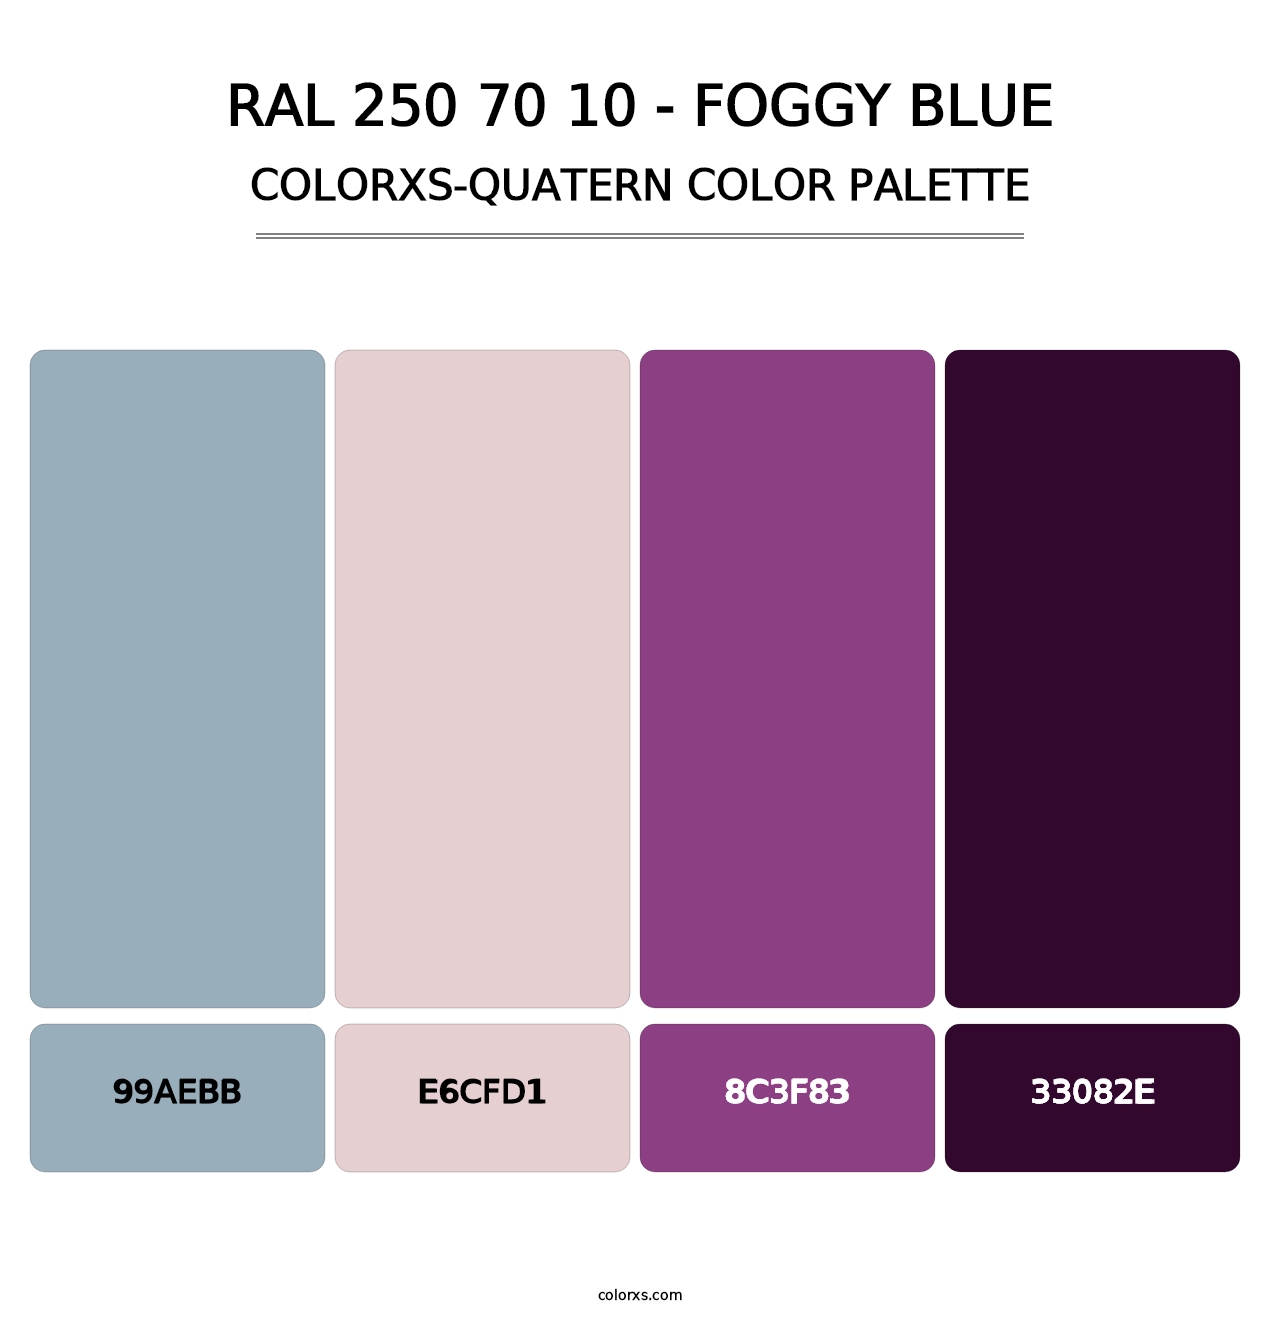 RAL 250 70 10 - Foggy Blue - Colorxs Quatern Palette